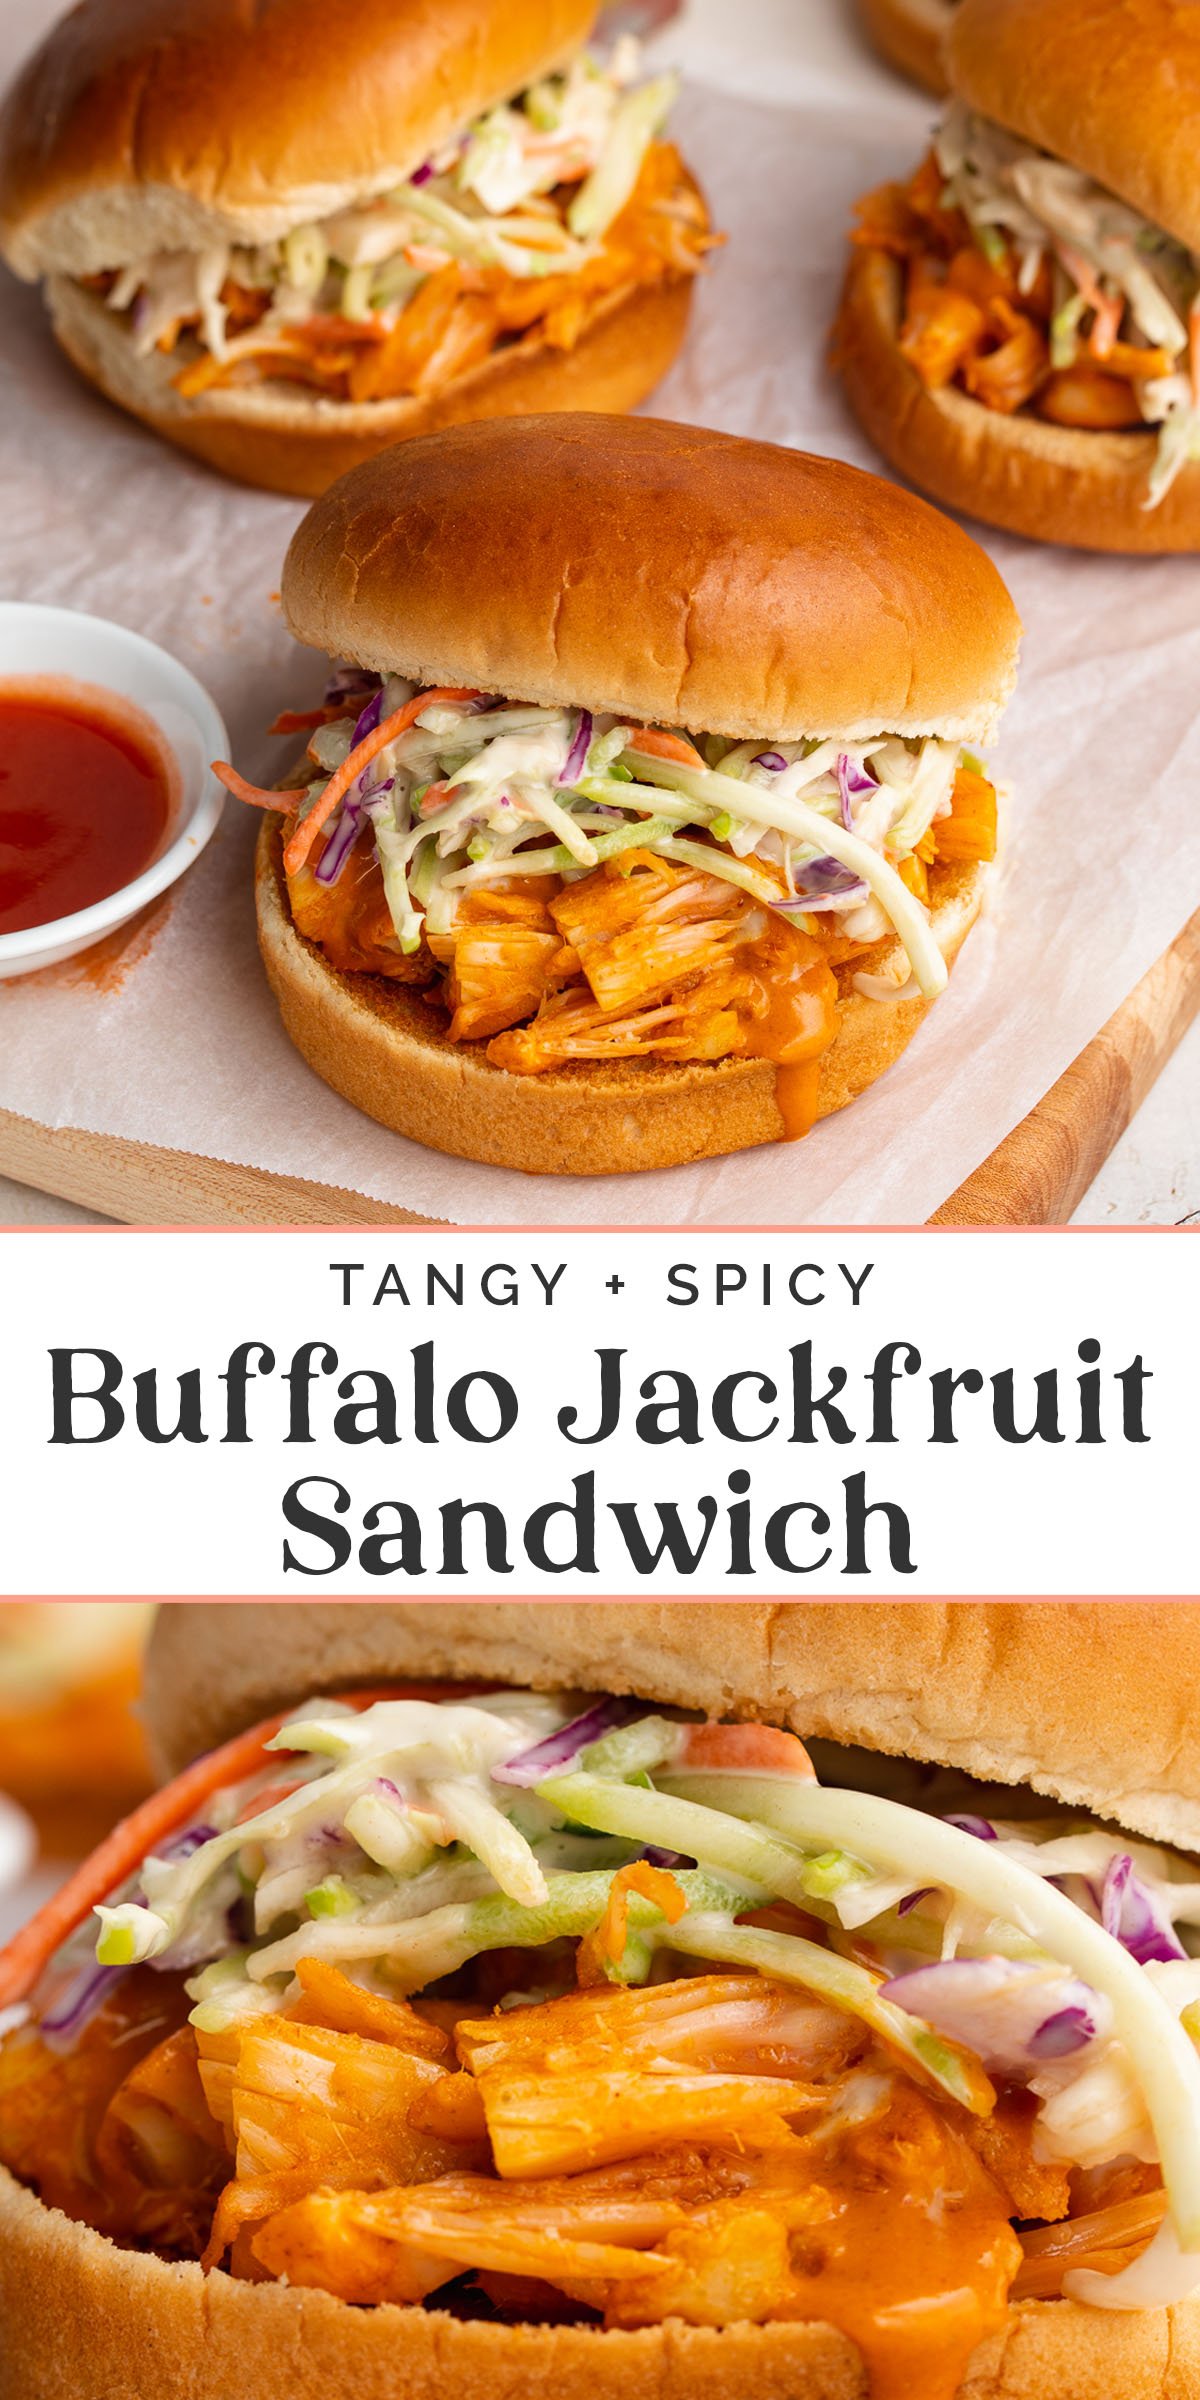 Pin graphic for buffalo jackfruit sandwich.